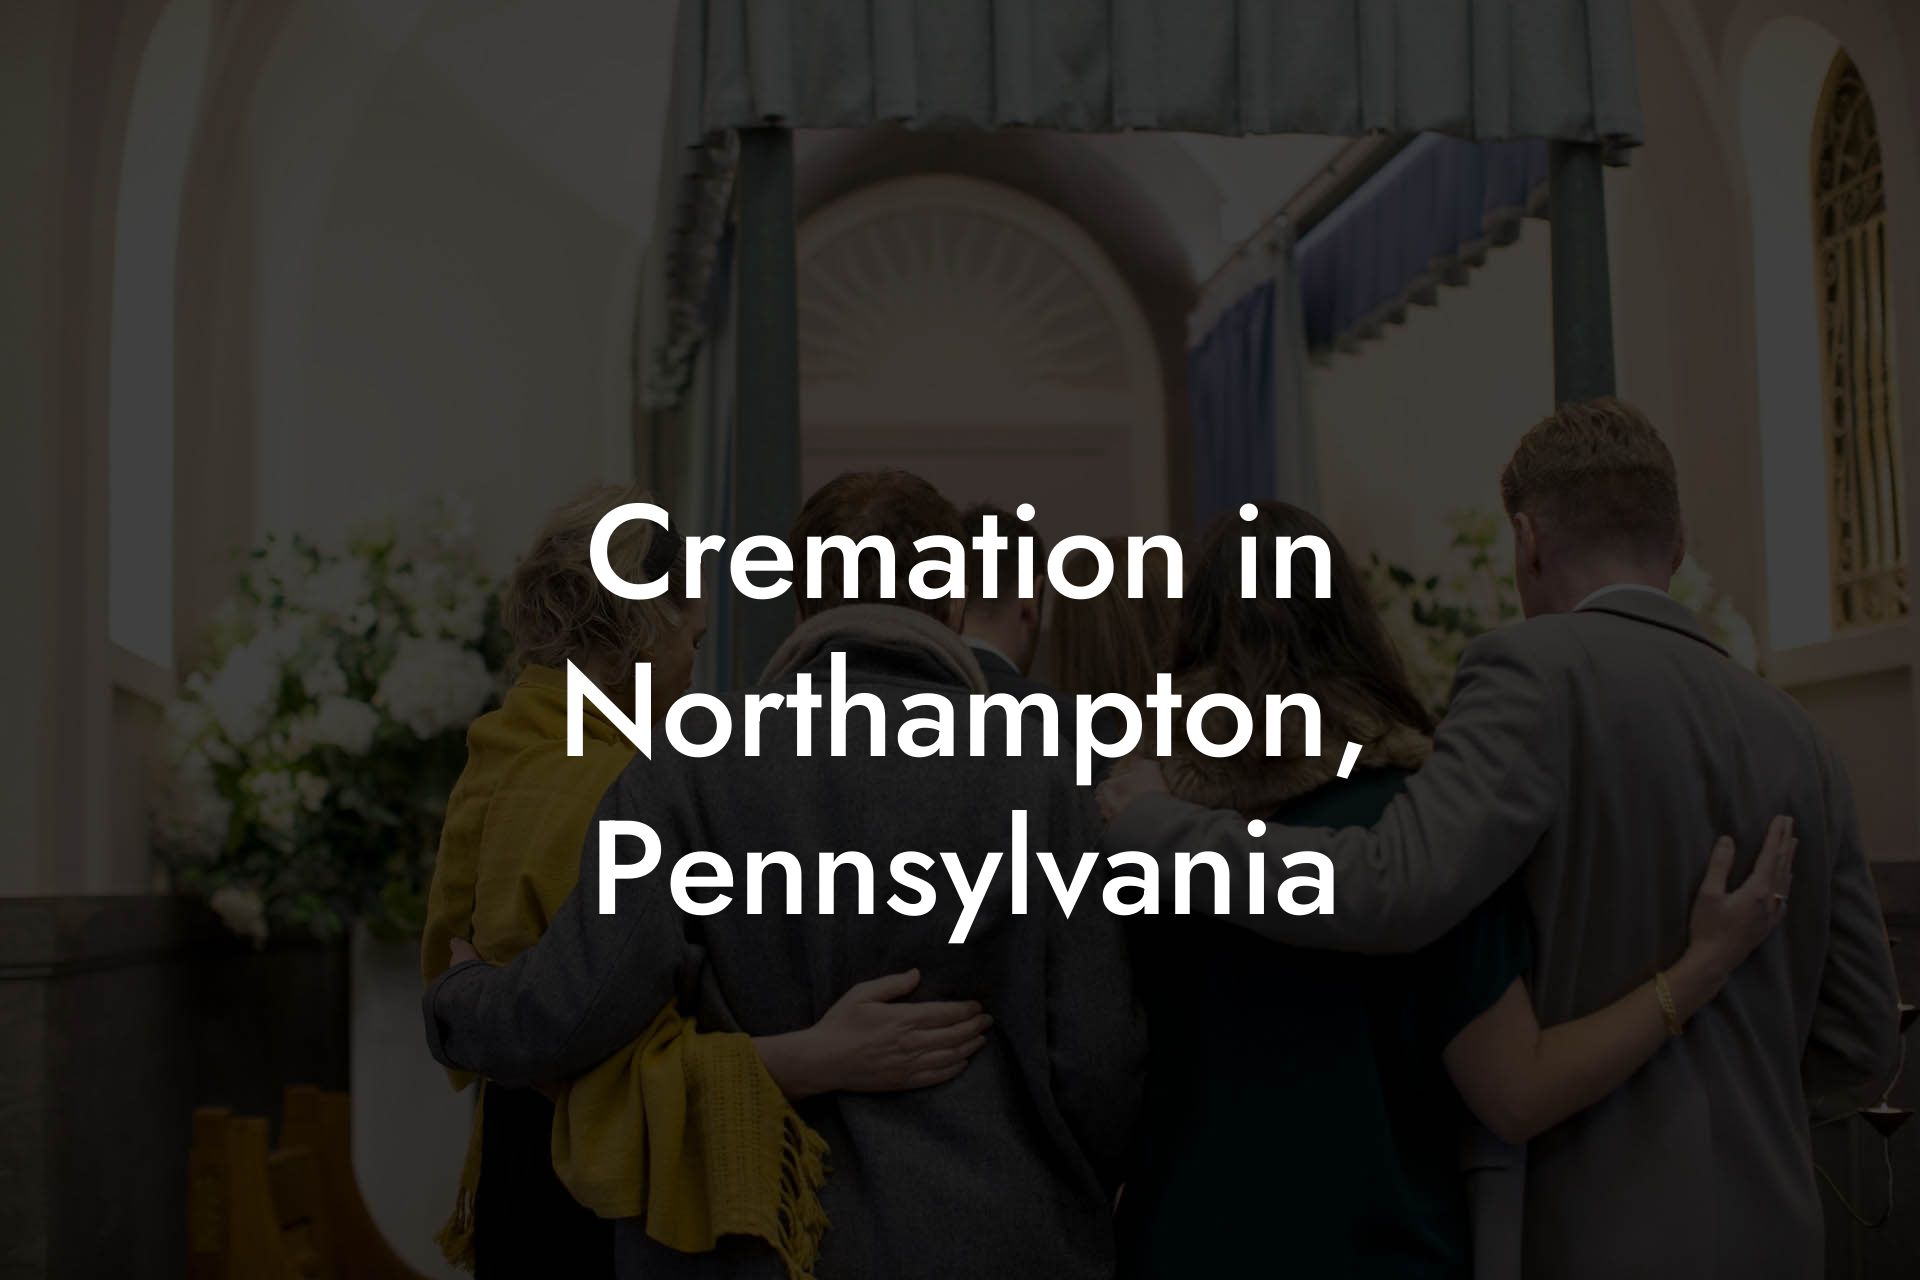 Cremation in Northampton, Pennsylvania